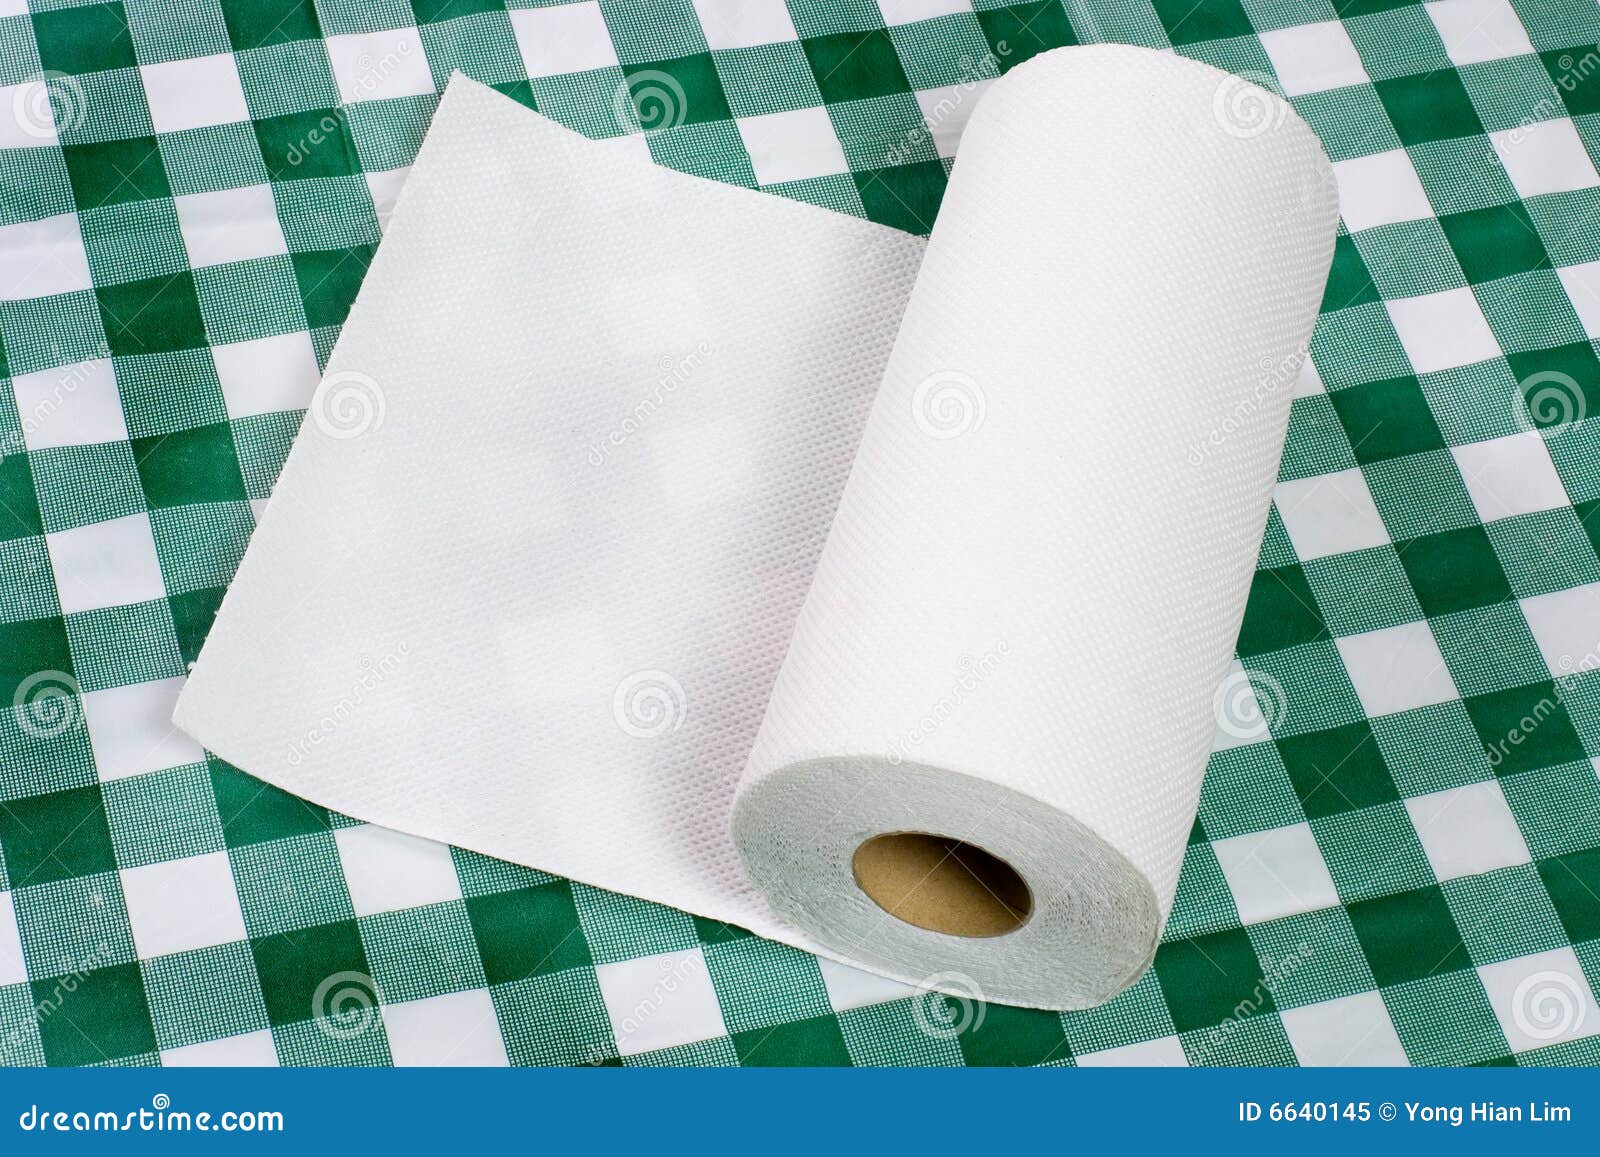 paper towel on tabletop